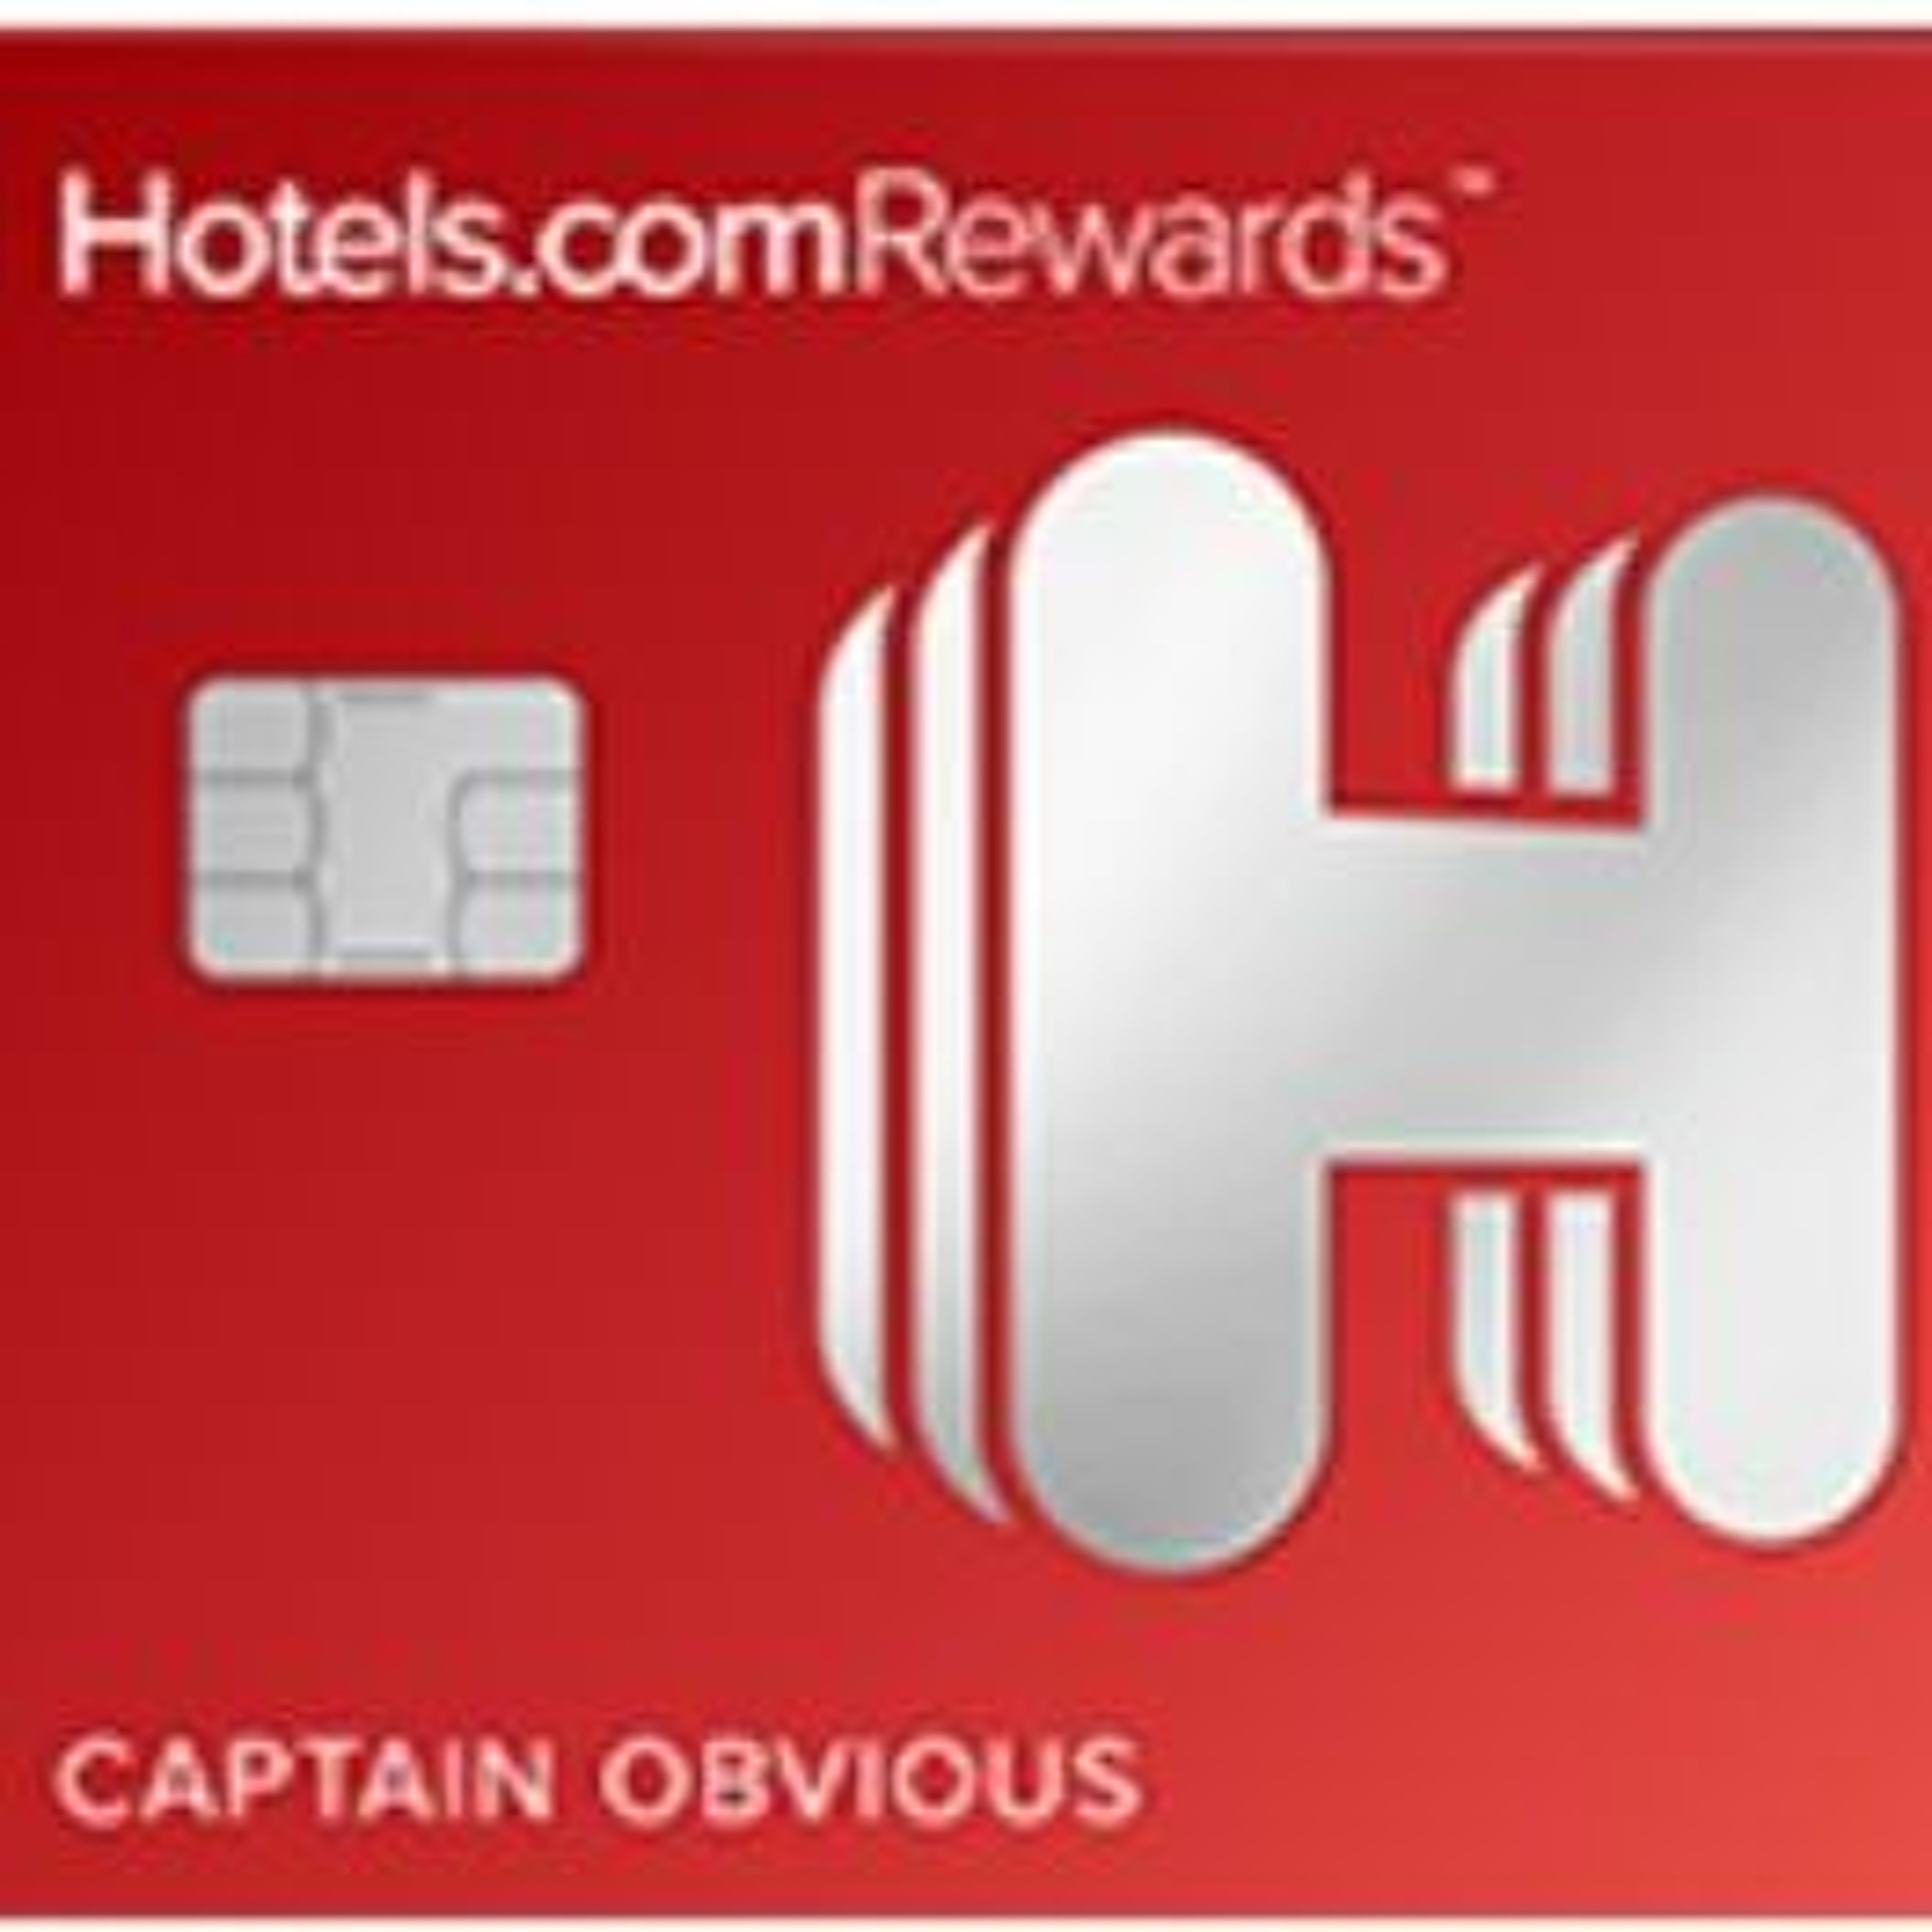 Episode 49 - Wells Fargo Hotels.com Credit Card Review